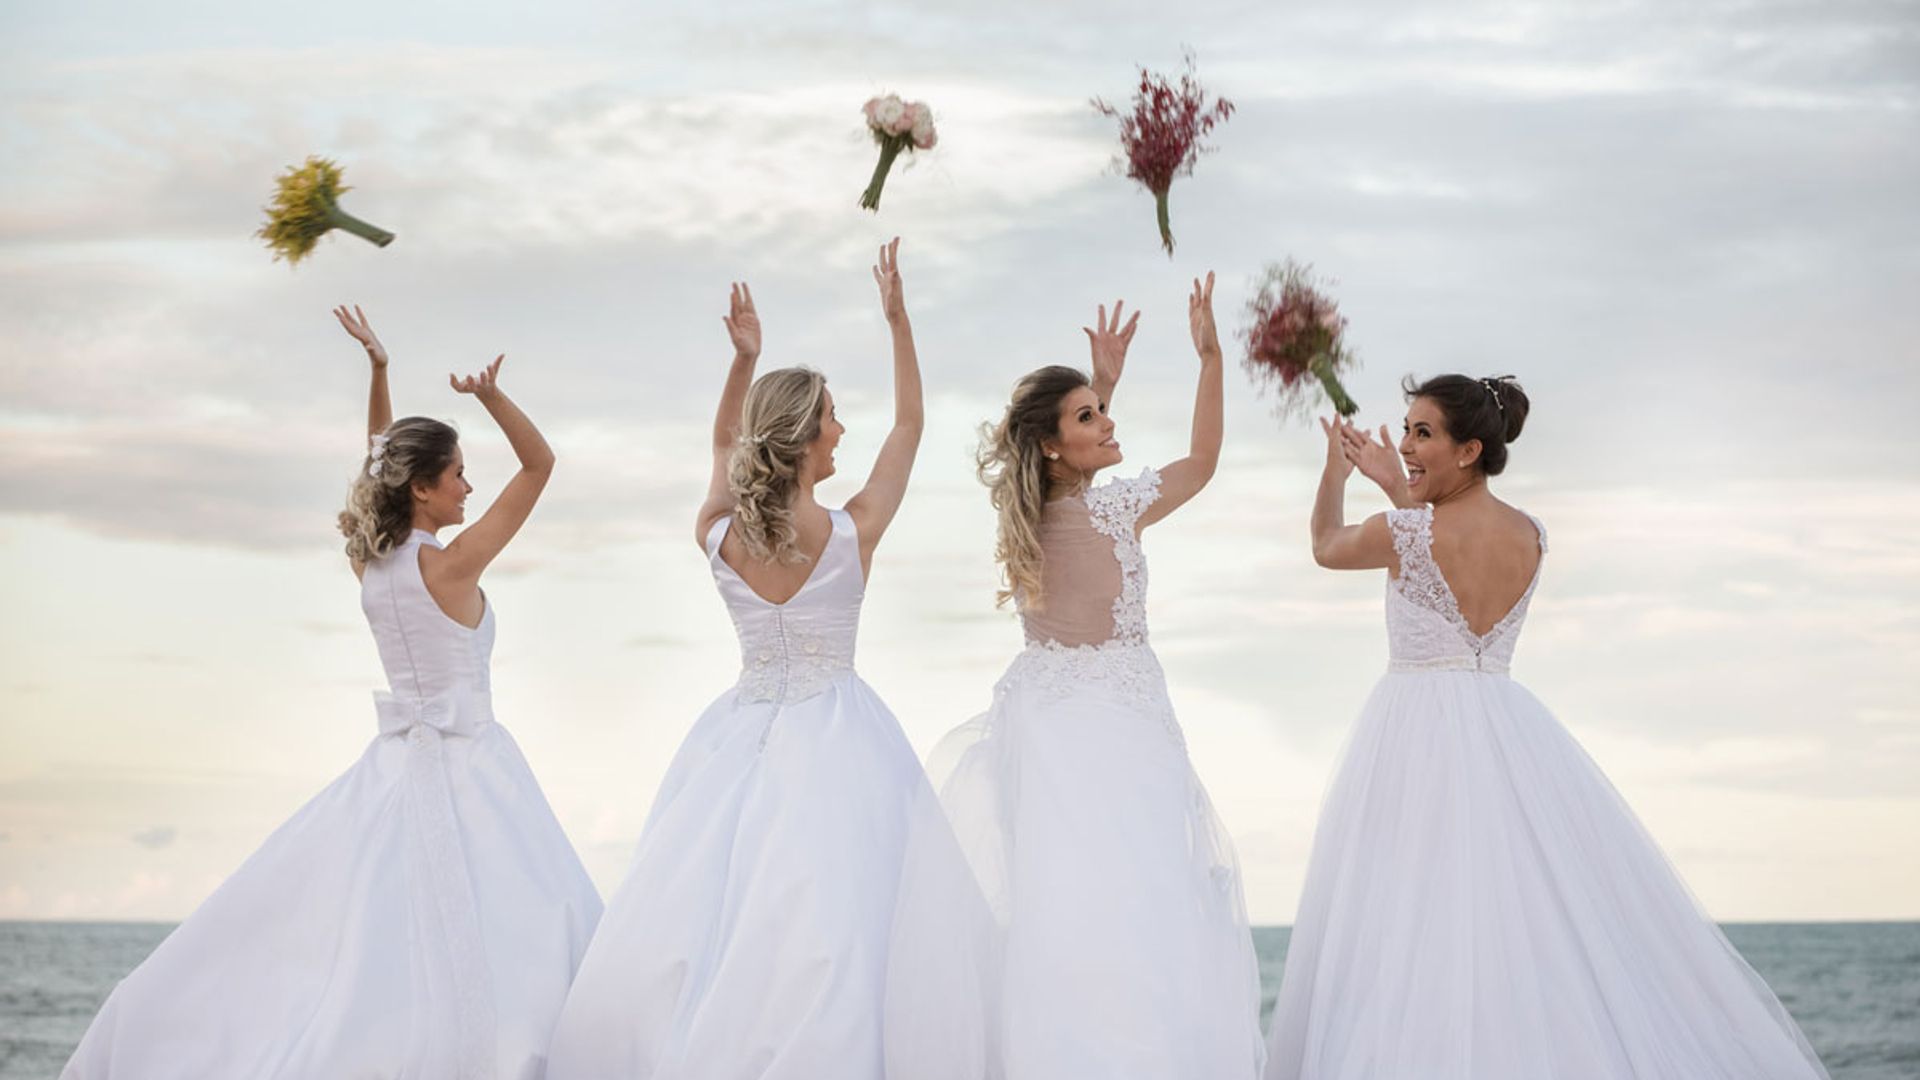 13 Best beach wedding dresses of 2022: ASOS, John Lewis & more